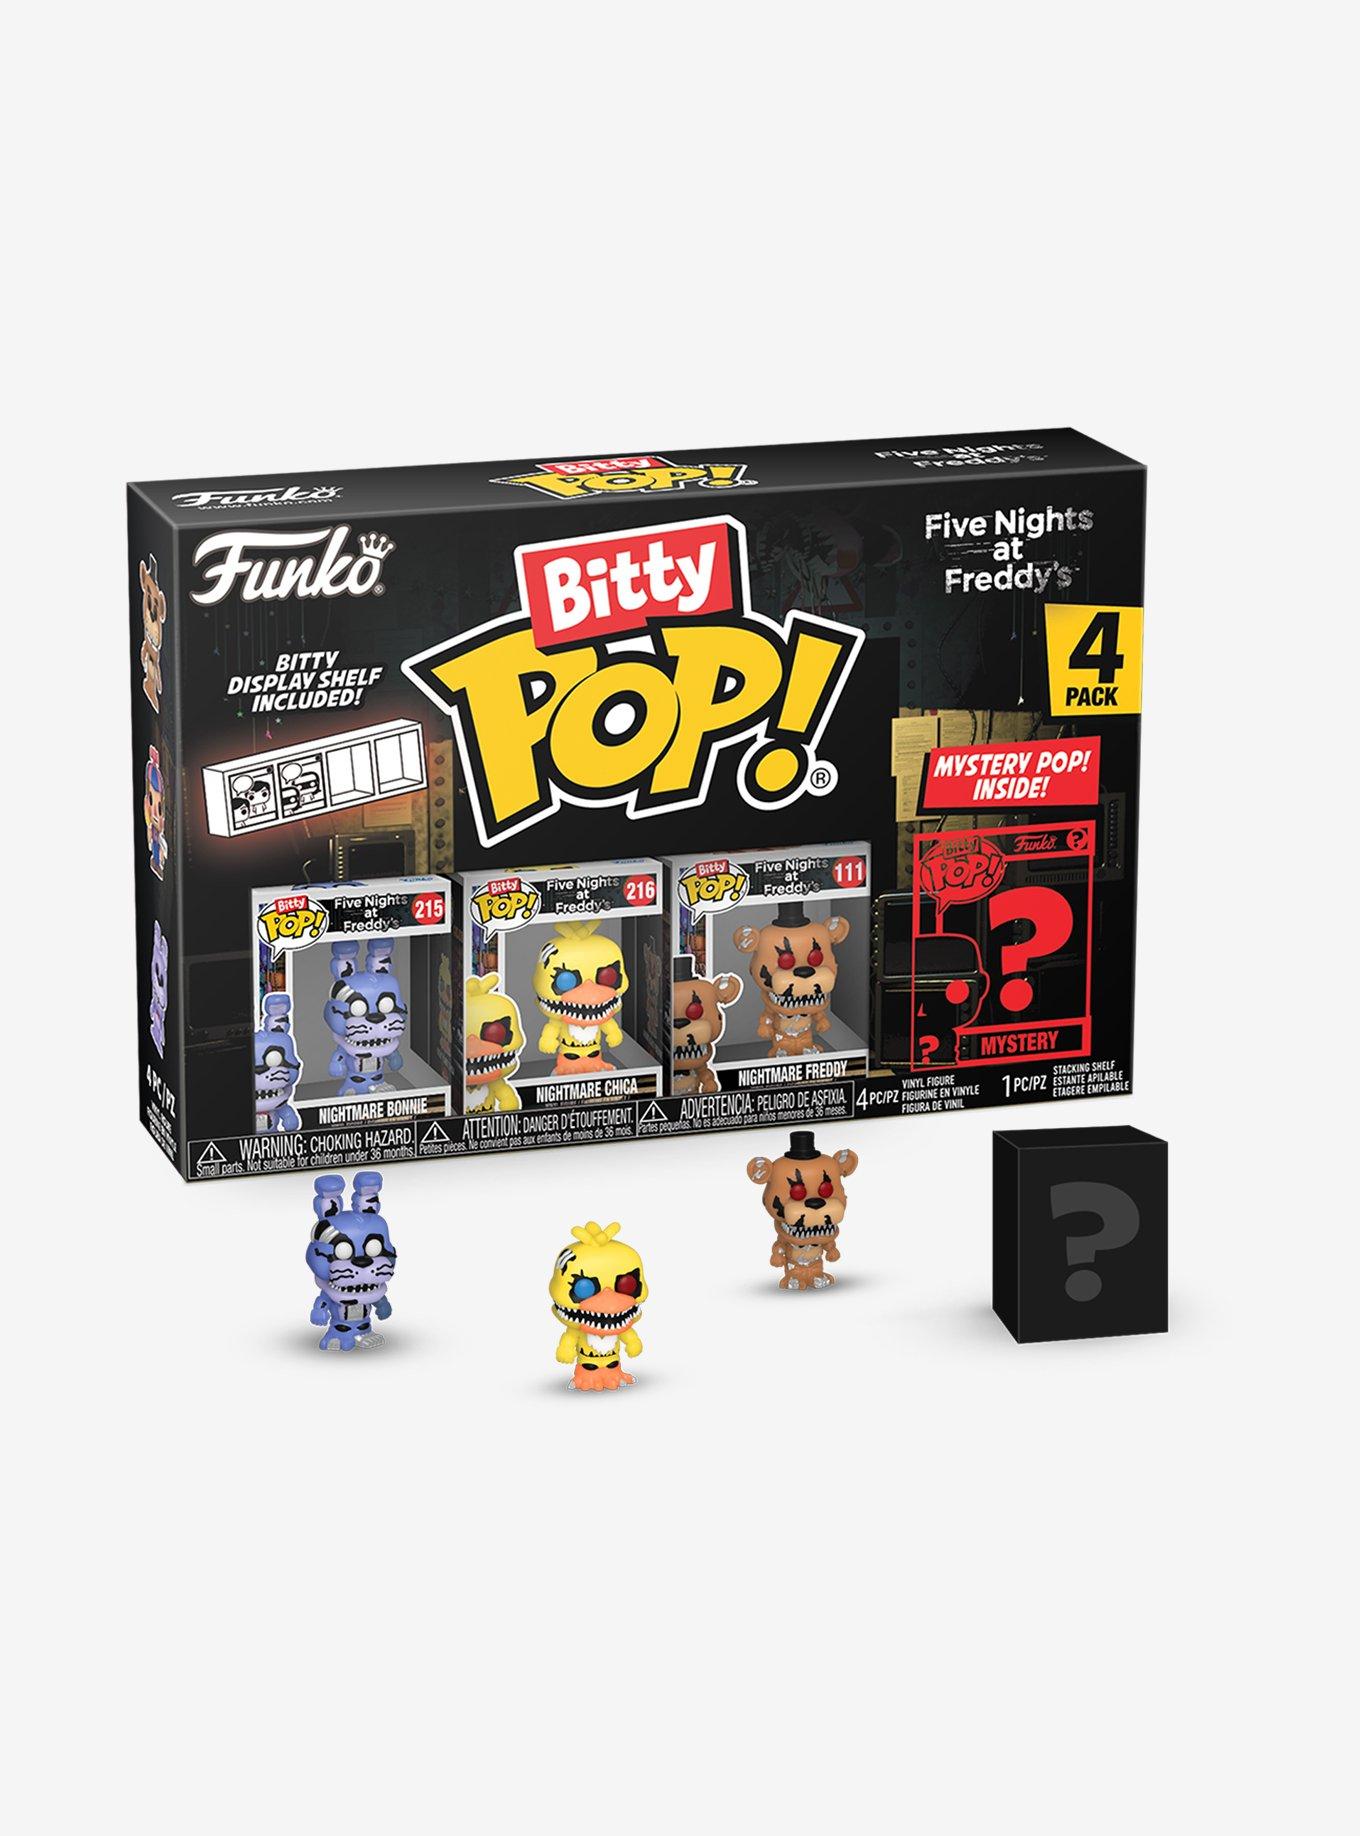 Funko Five Nights At Freddy's Bitty Pop! Bonnie Set